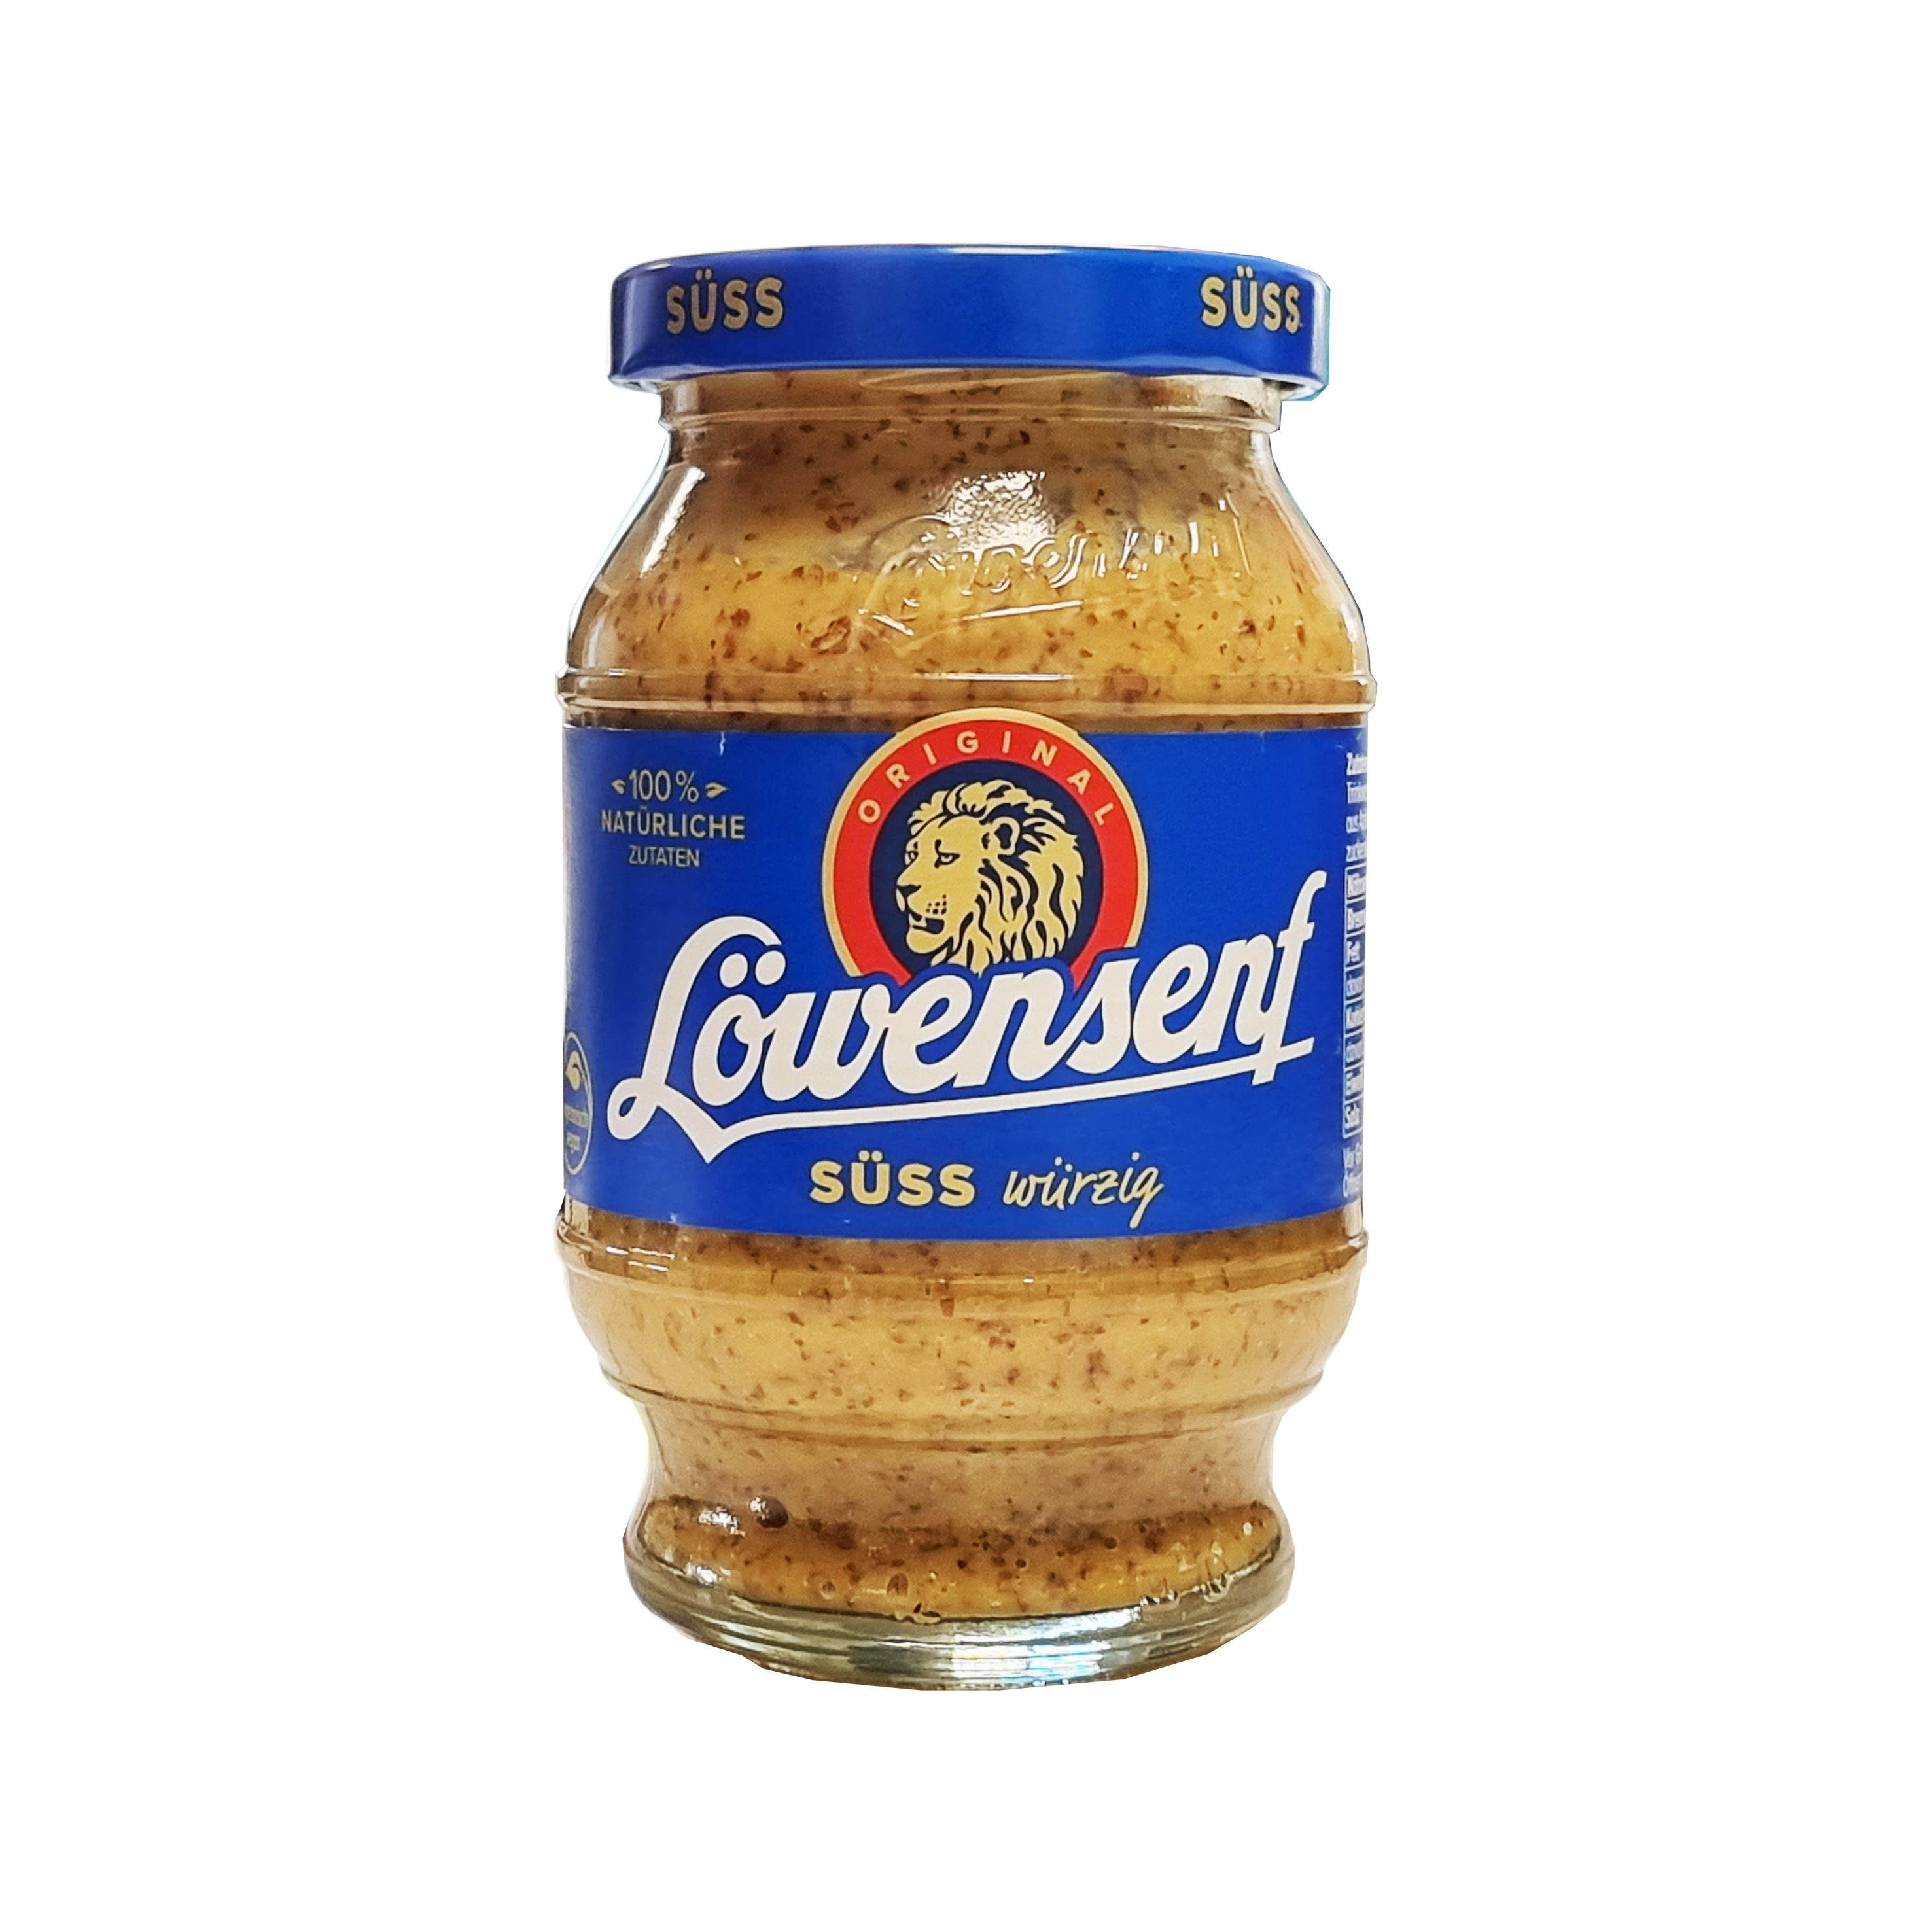 Lowensenf mostaza dulce 250ml